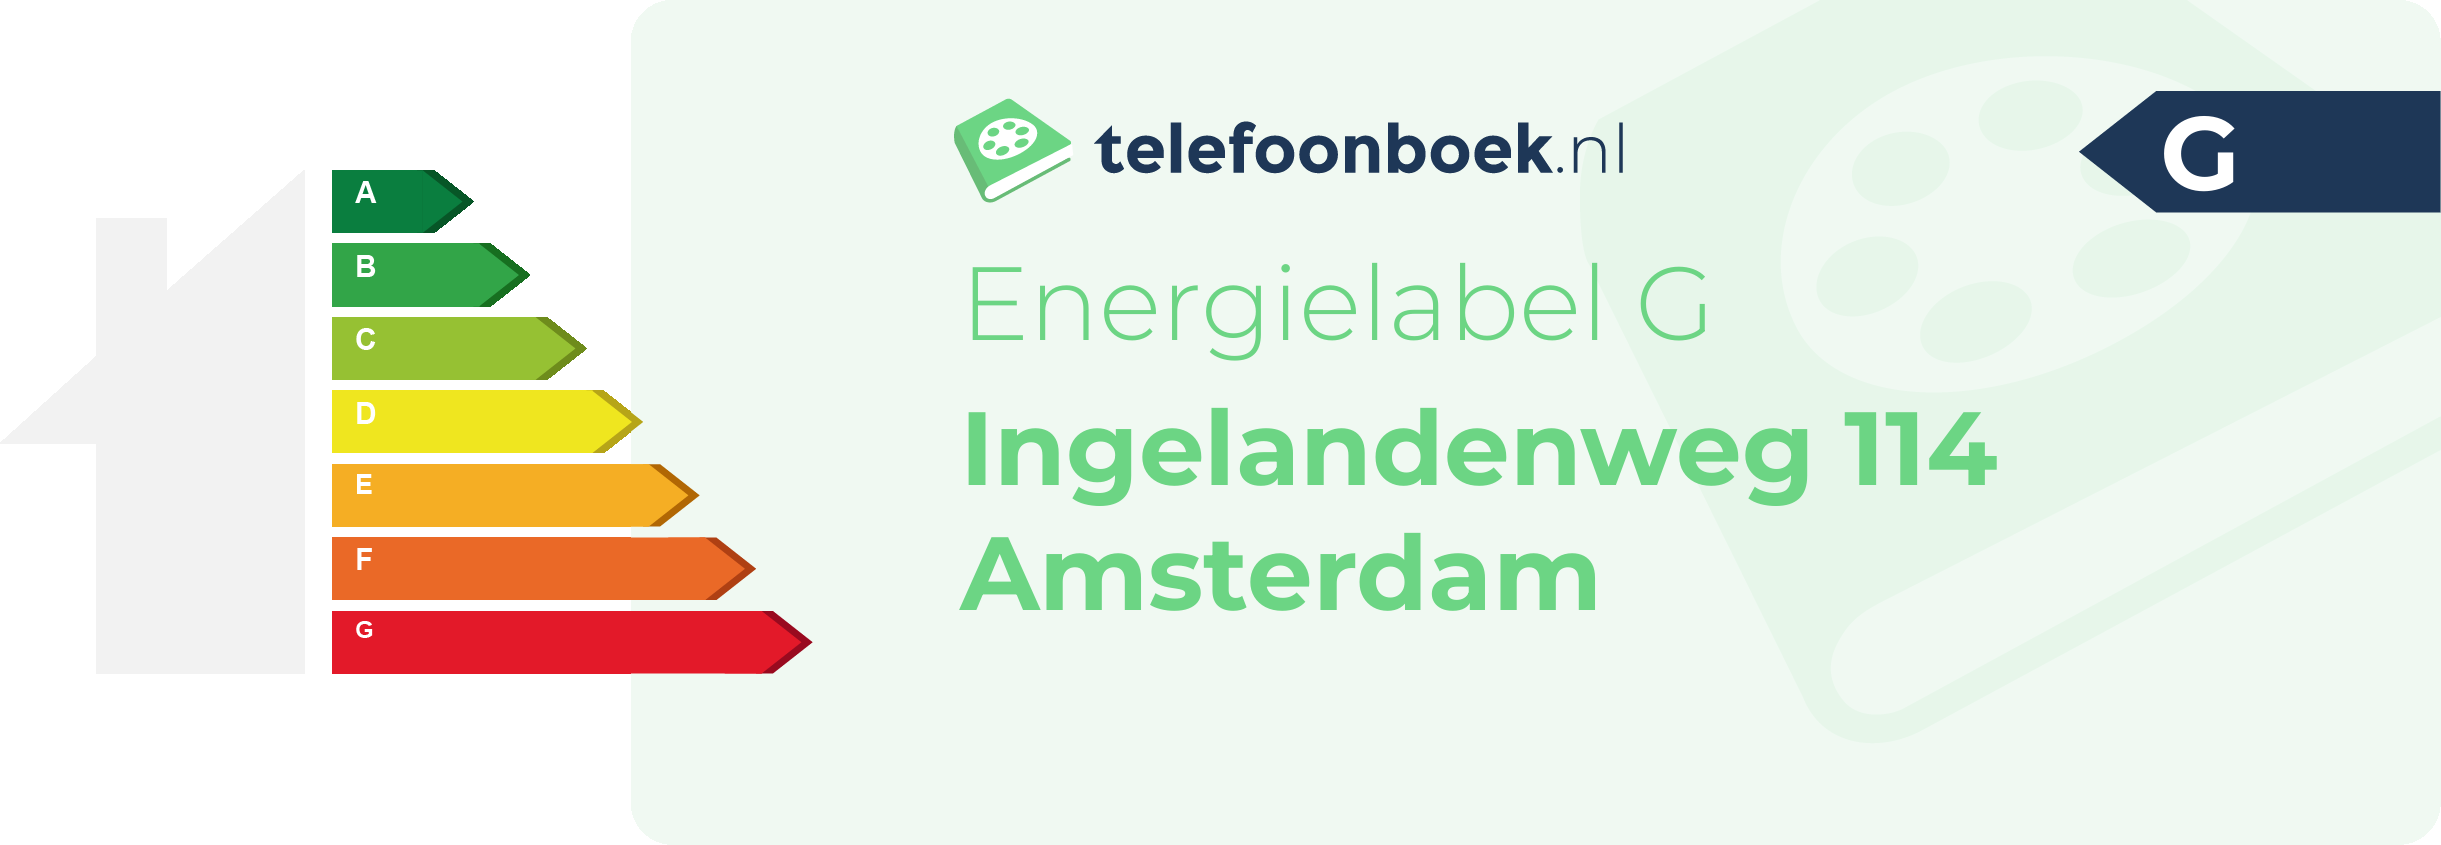 Energielabel Ingelandenweg 114 Amsterdam